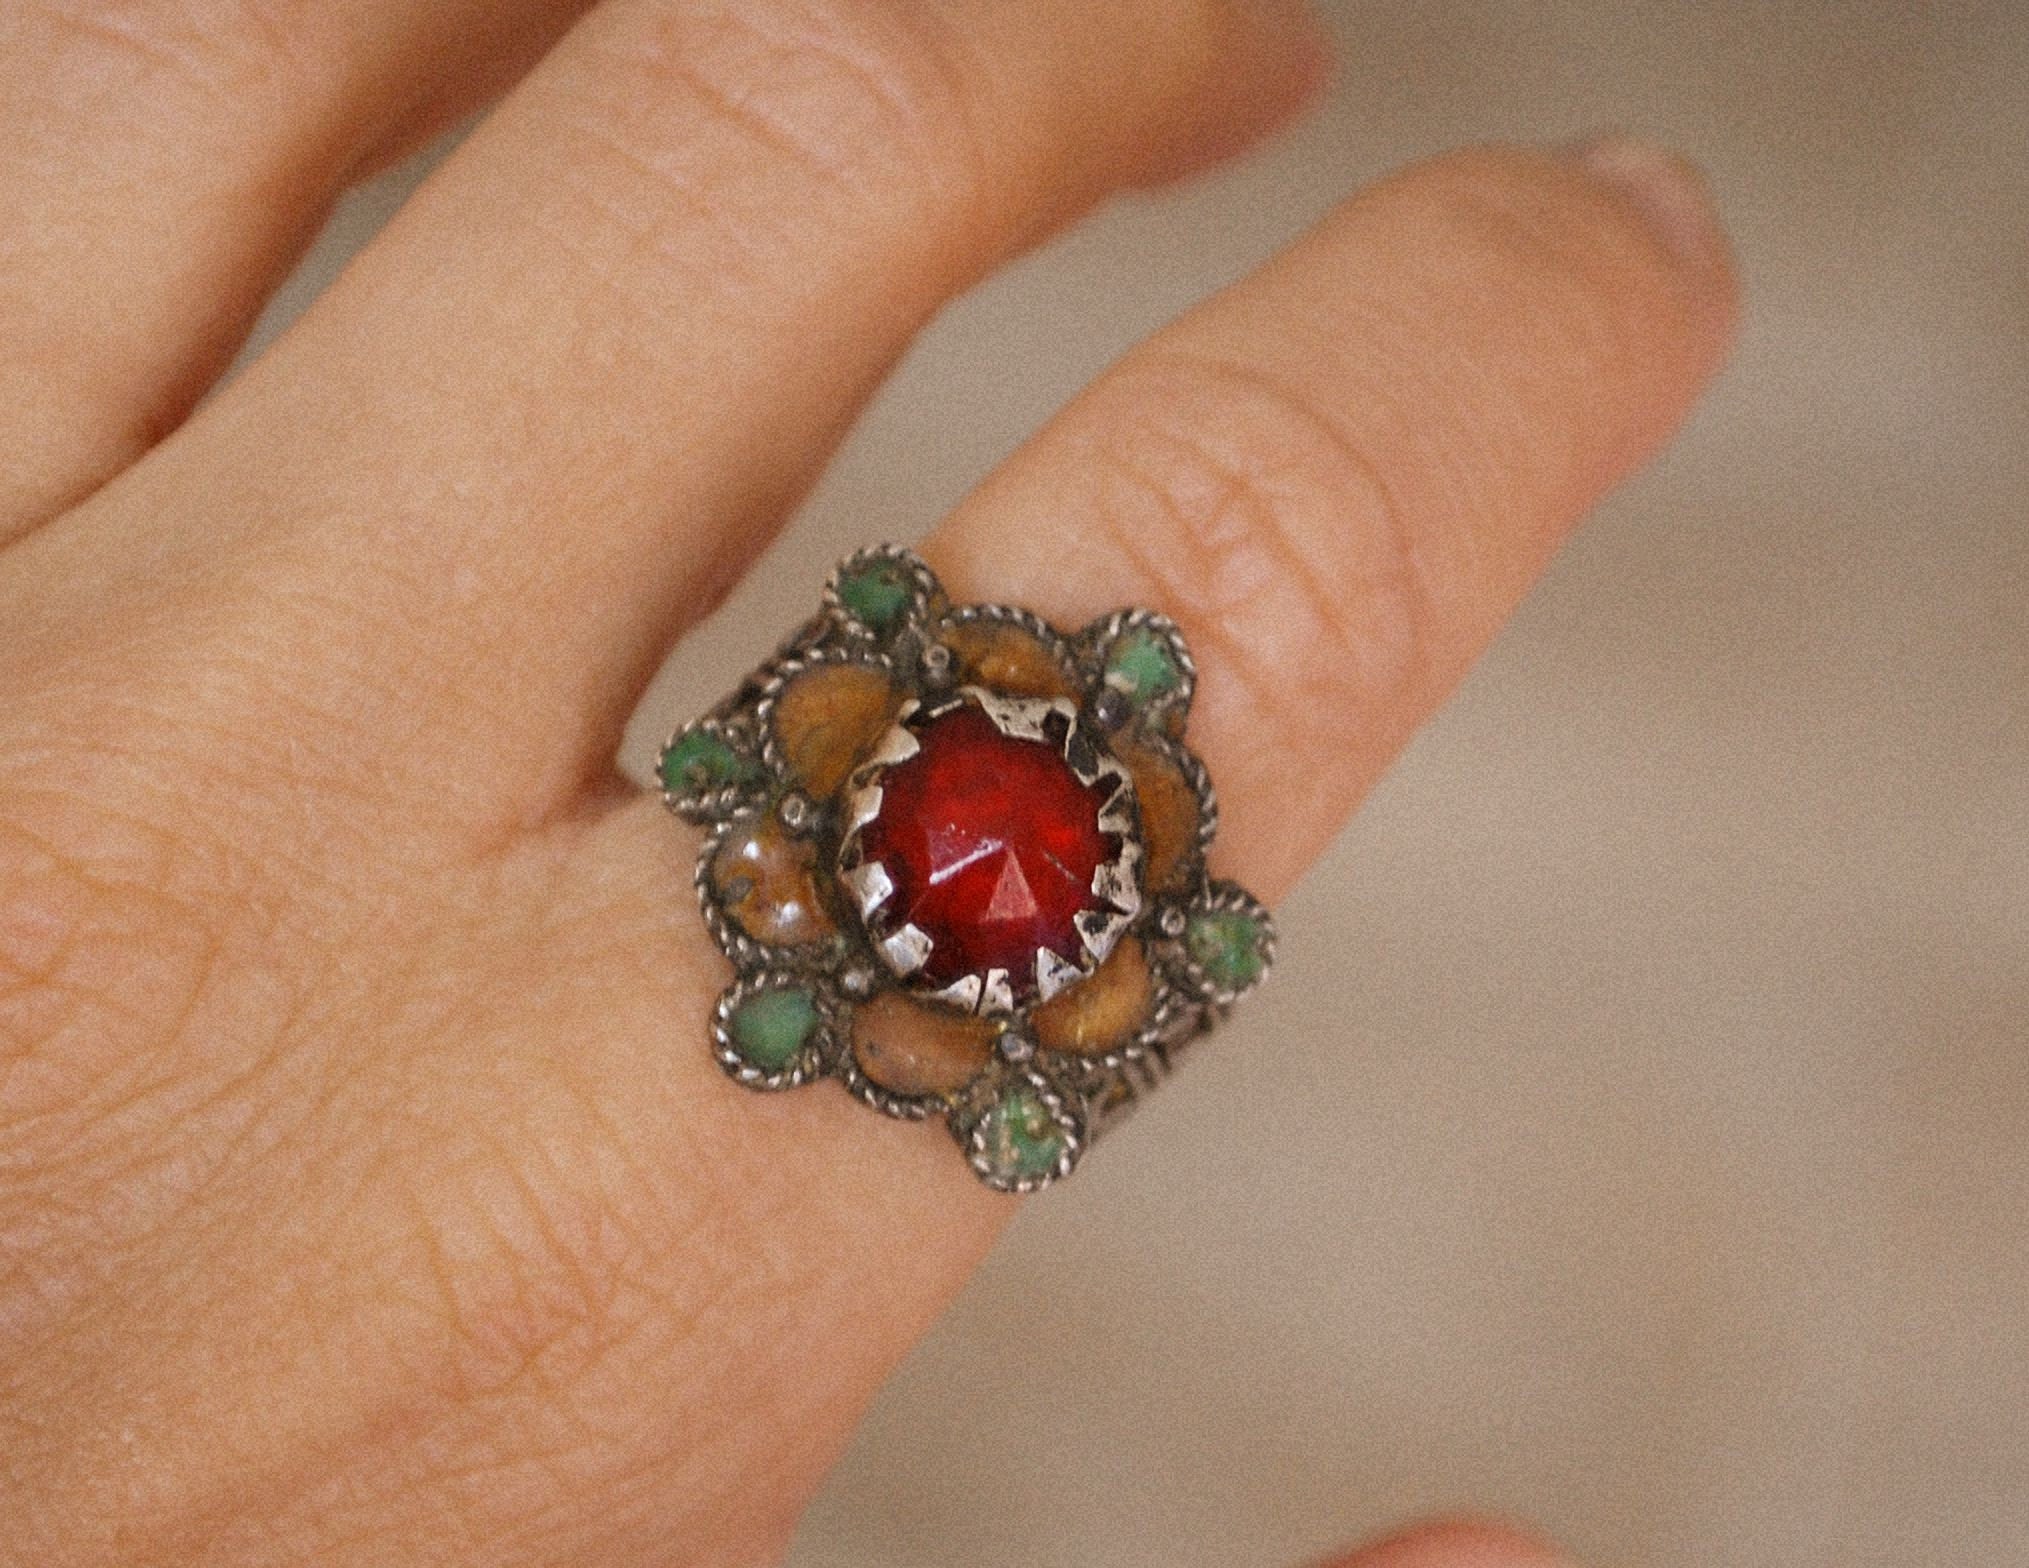 Berber Ring with Enamel - Size 8.5 - Berber Jewelry - Ethnic Ring - Tribal Ring - Moroccan Jewelry - Ethnic Jewelry